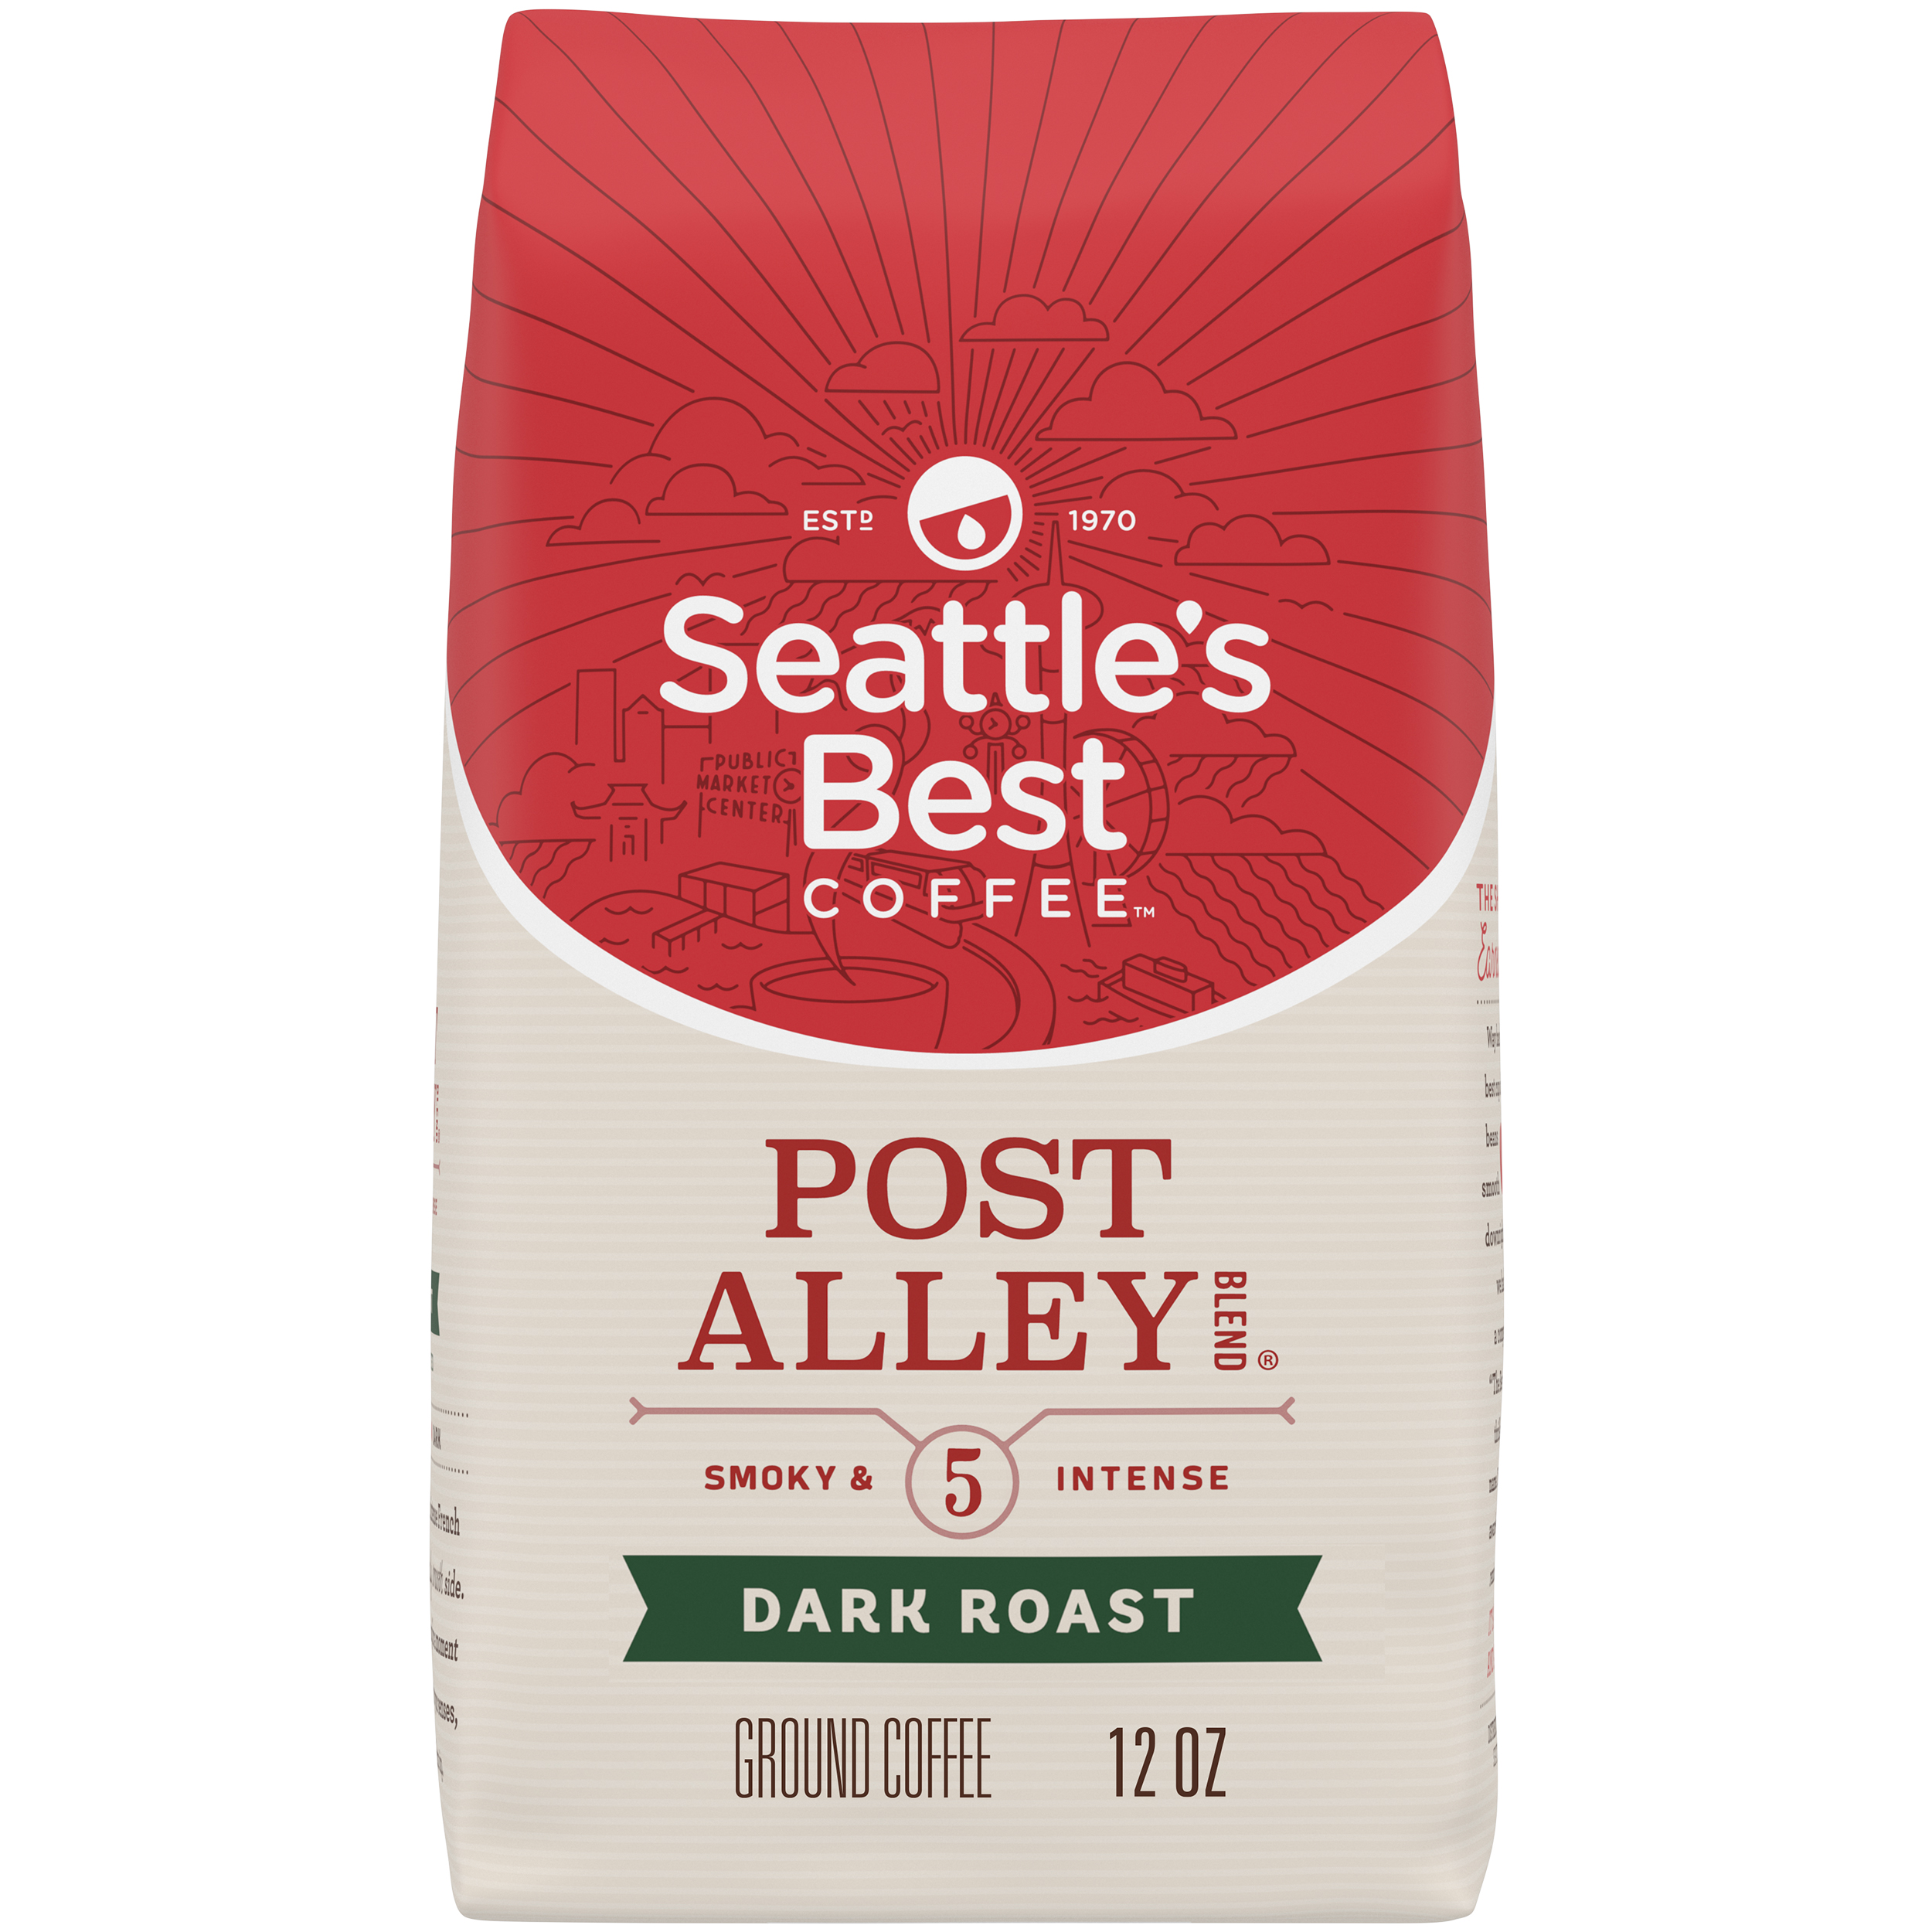 Seattle's Best Coffee Arabica Beans Post Alley Blend, Dark Roast, Ground Coffee, 12 oz - image 1 of 5